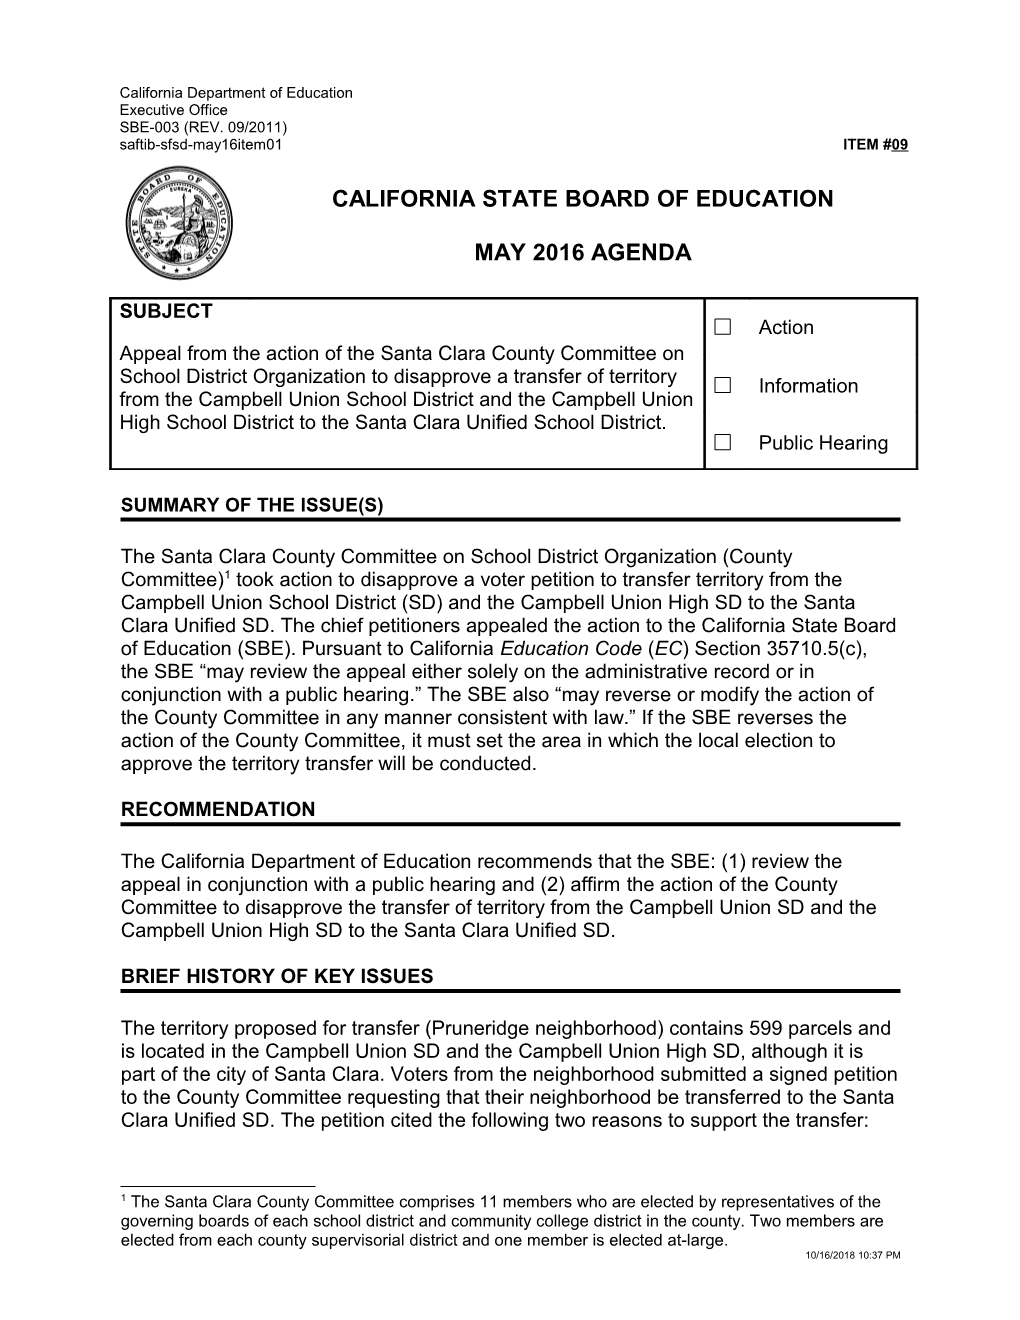 May 2016 Agenda Item 09 - Meeting Agendas (CA State Board of Education)